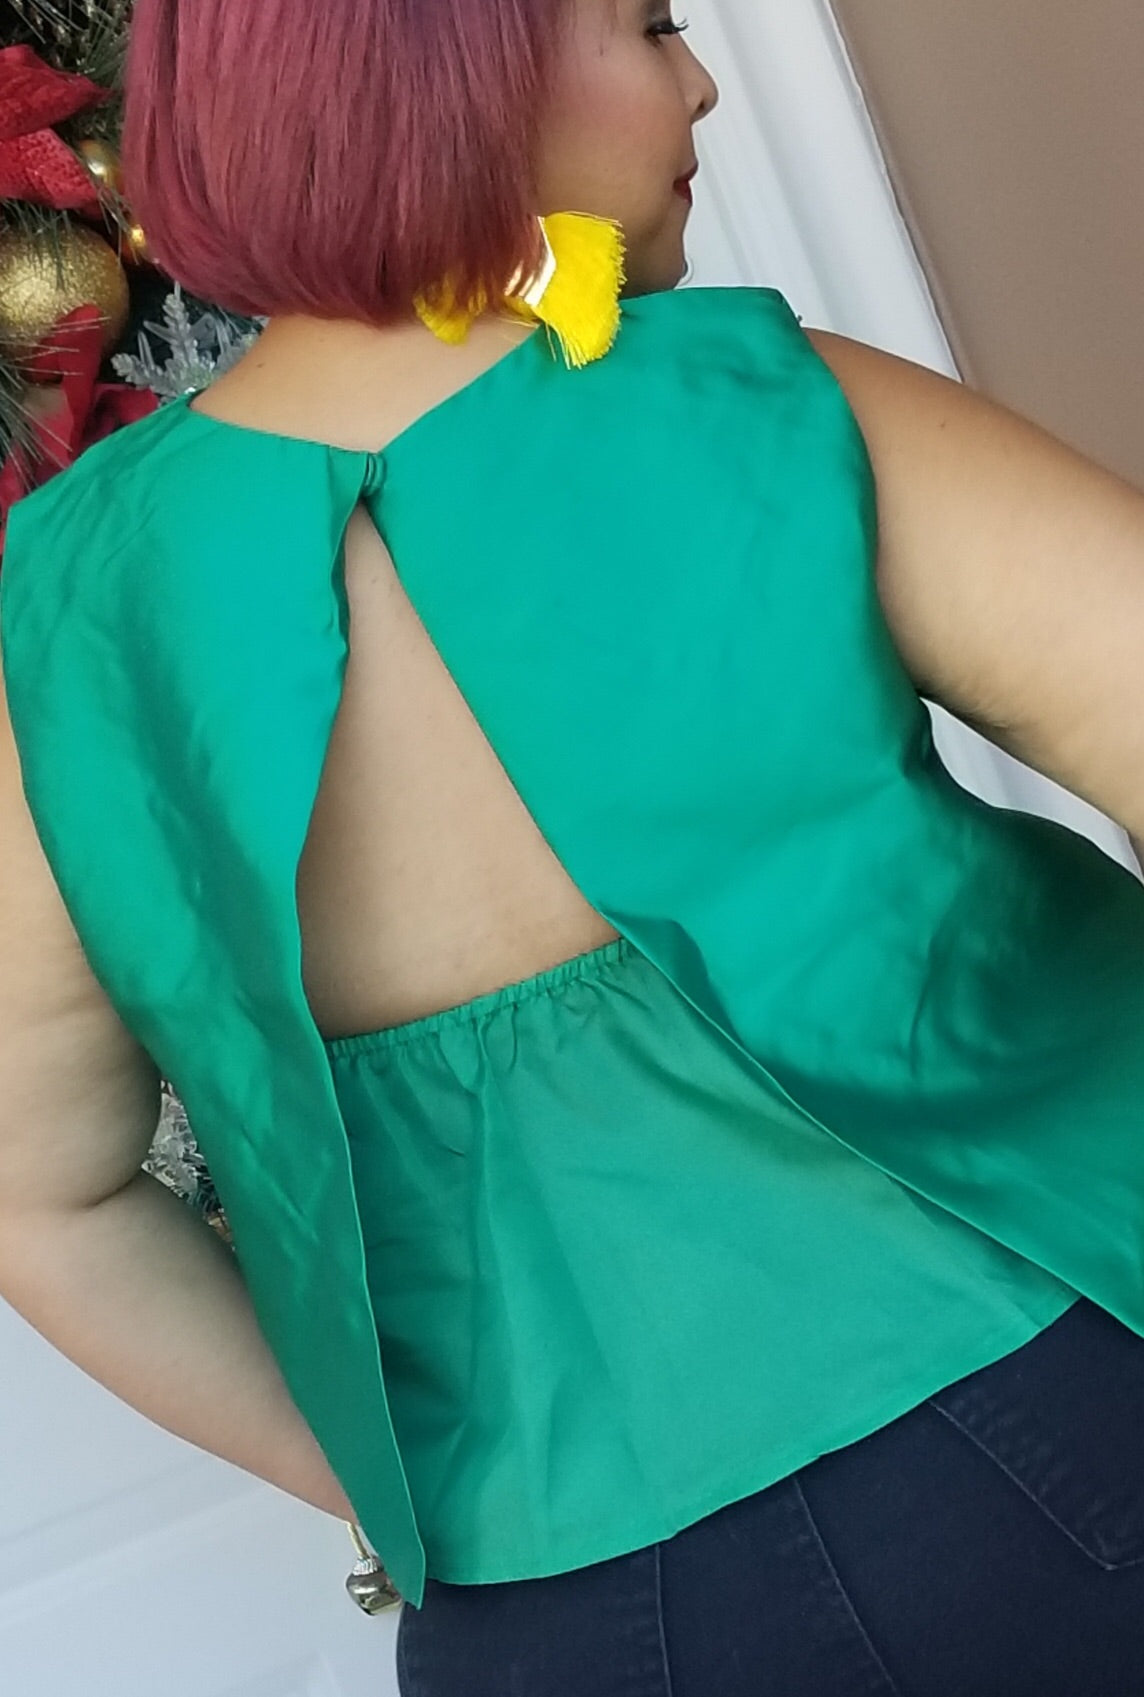 Green satin and rhinestones blouse